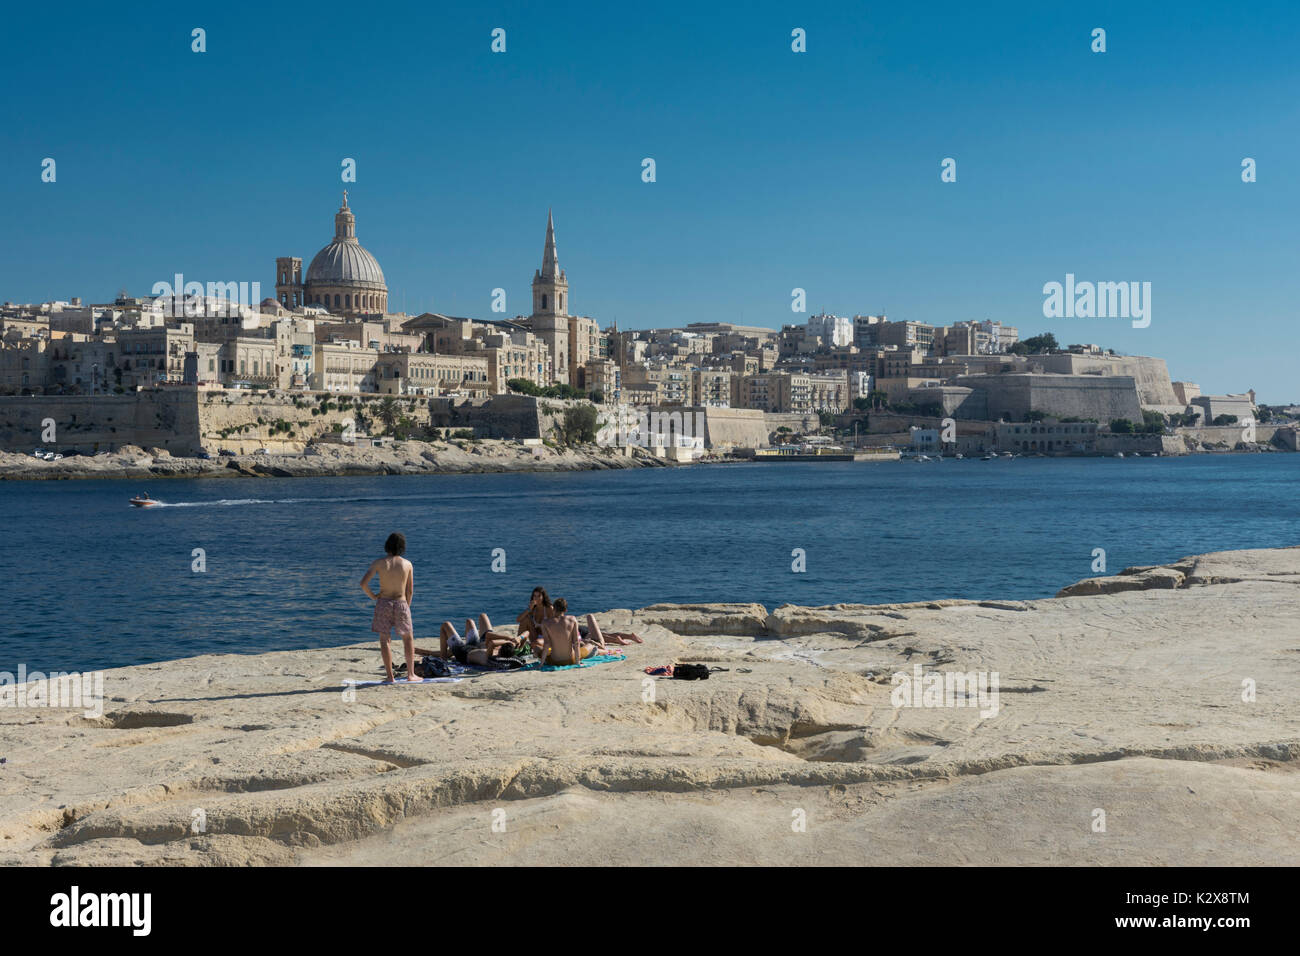 Scenic view of Valletta, Malta, from Sliema, looking across Marsamxett Harbour Stock Photo